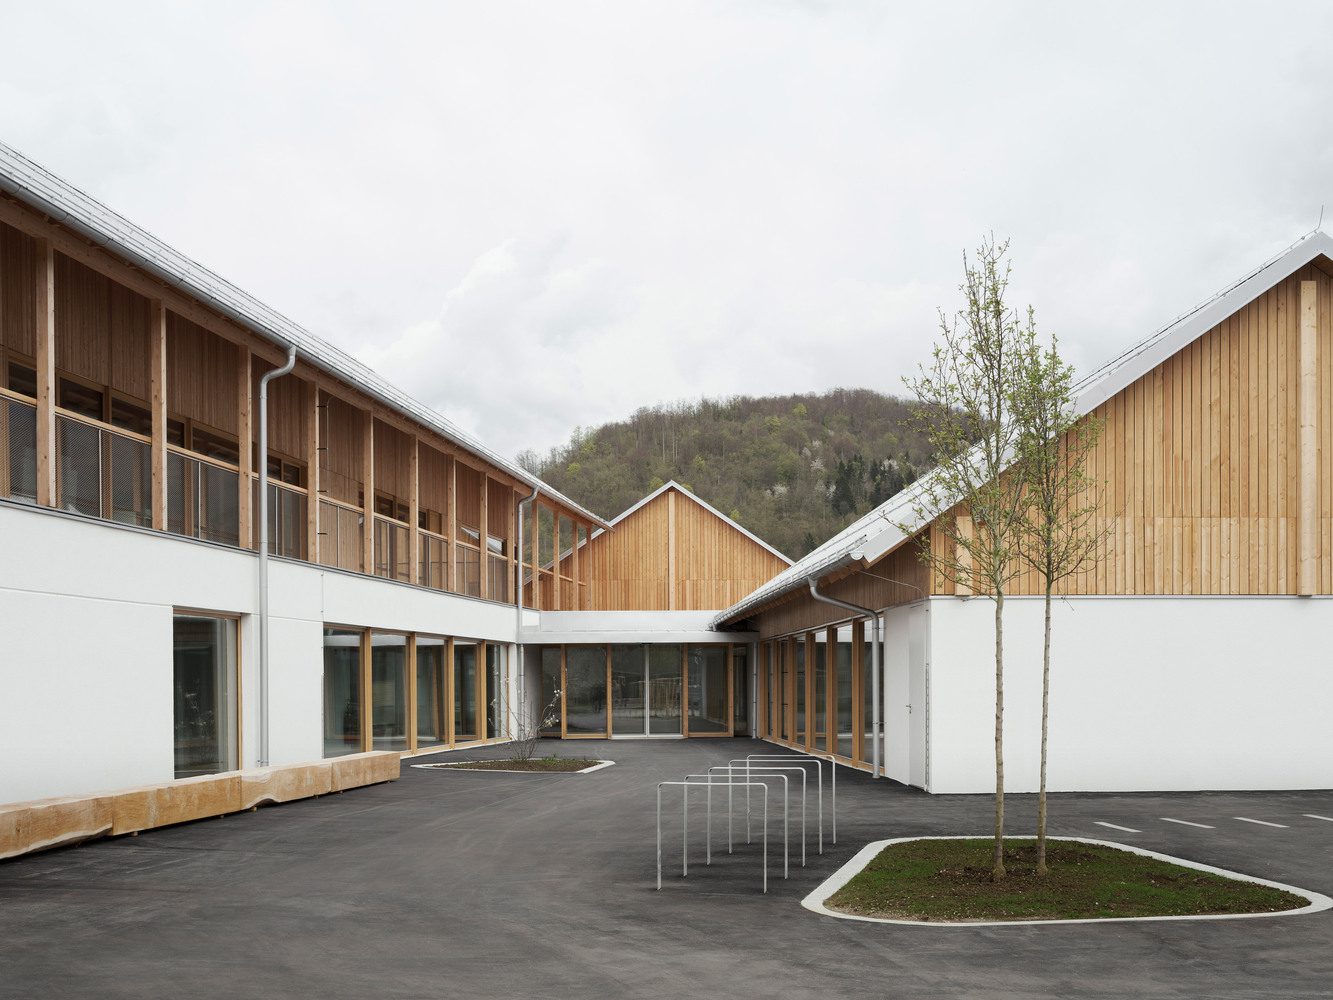 The Bohinj Kindergarten